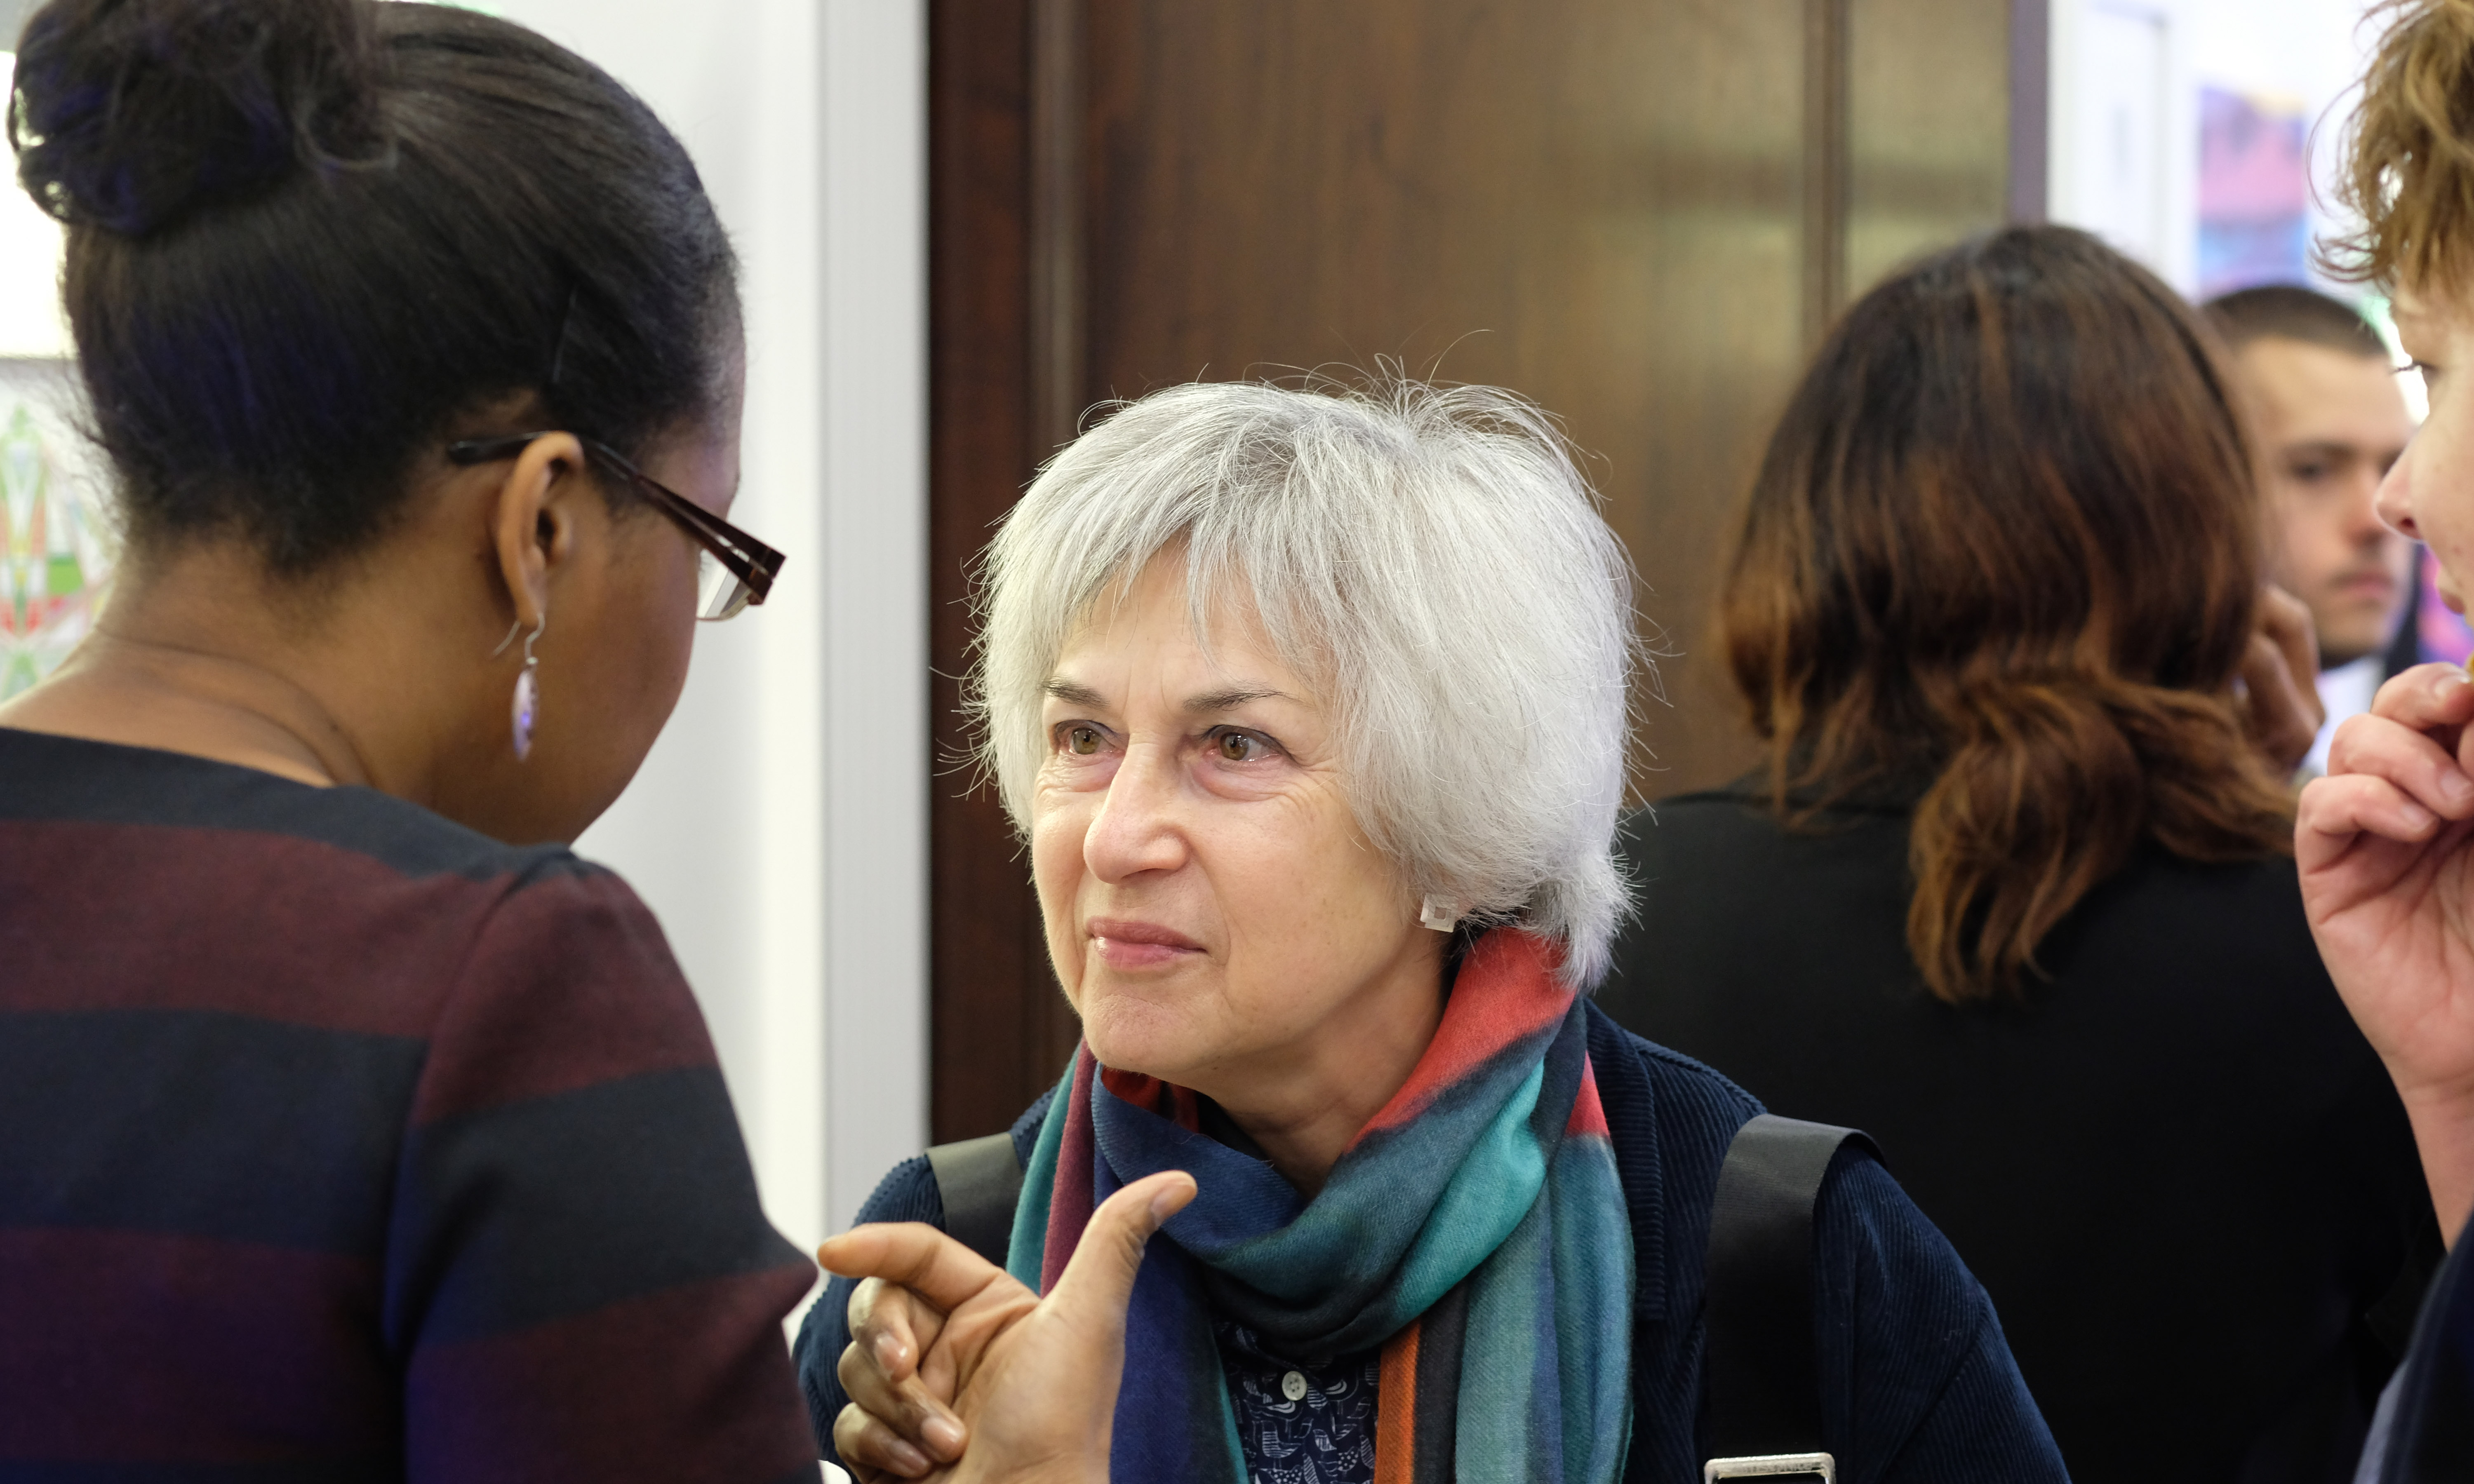 2015-UCL  “Inspiring Women in Ophthalmology” keynote Professor Veronica van Heyningen (OBE) enjoying the networking session